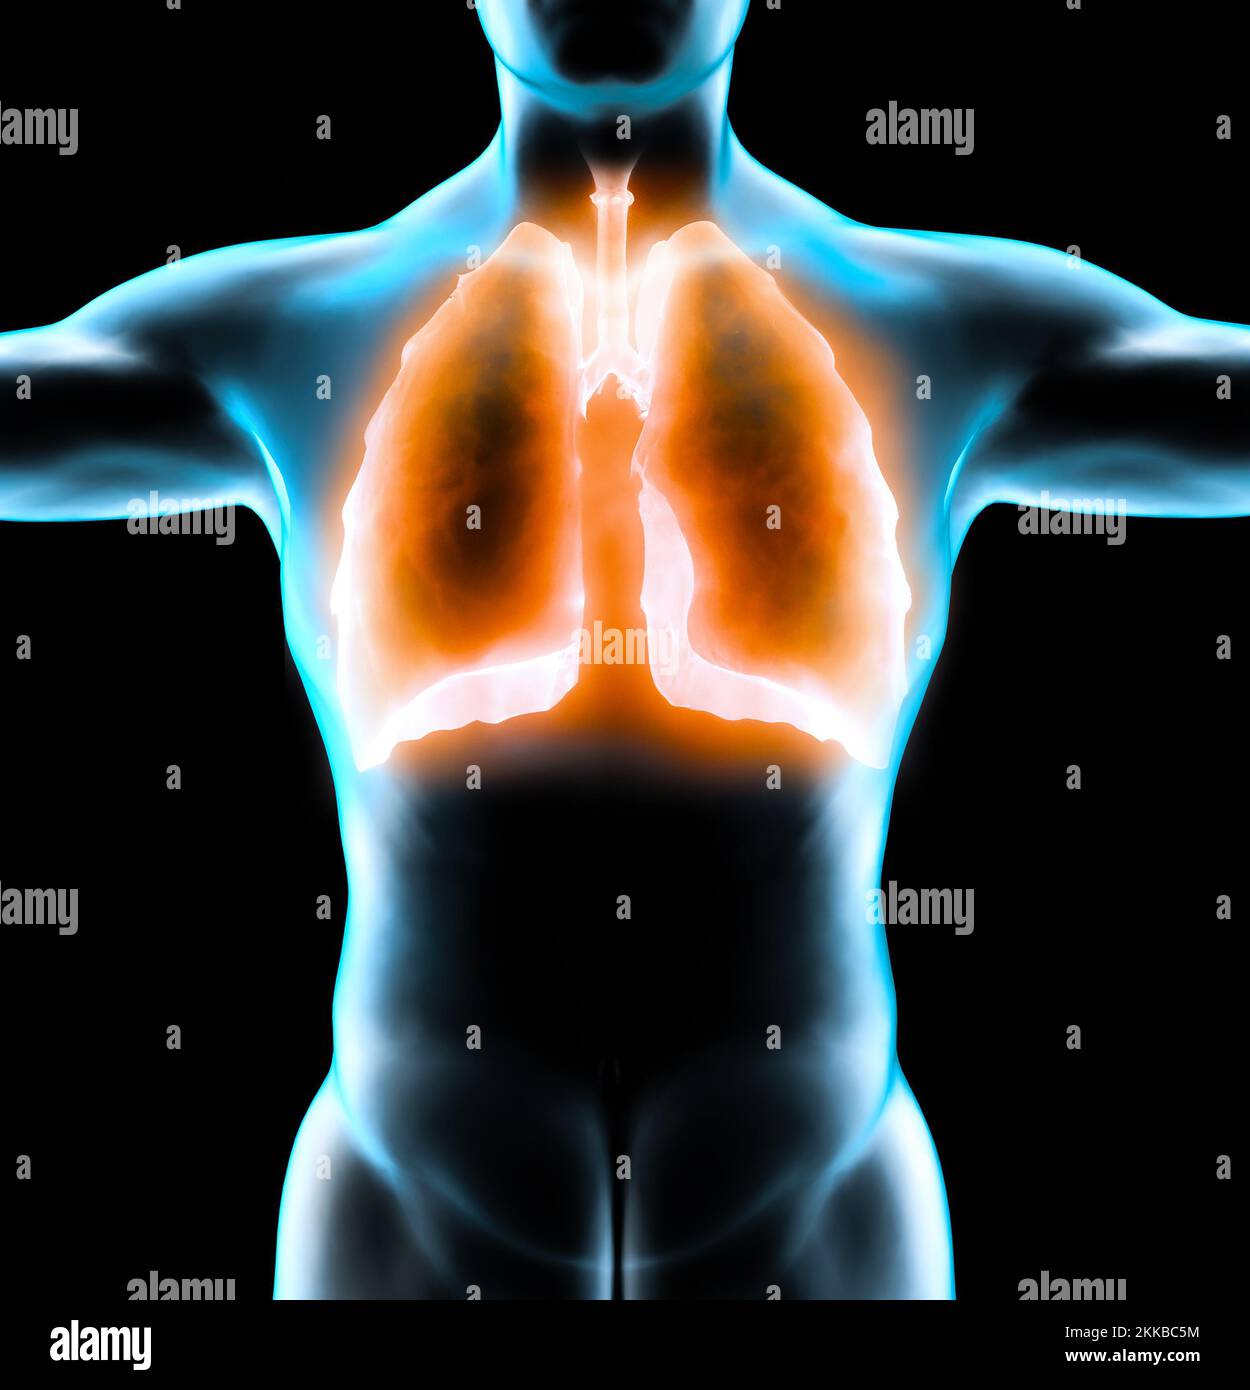 Human anatomy, problems with the respiratory system, severely damaged lungs. Bilateral pneumonia. Covid-19, coronavirus. Patient and smoke. Smoker Stock Photo